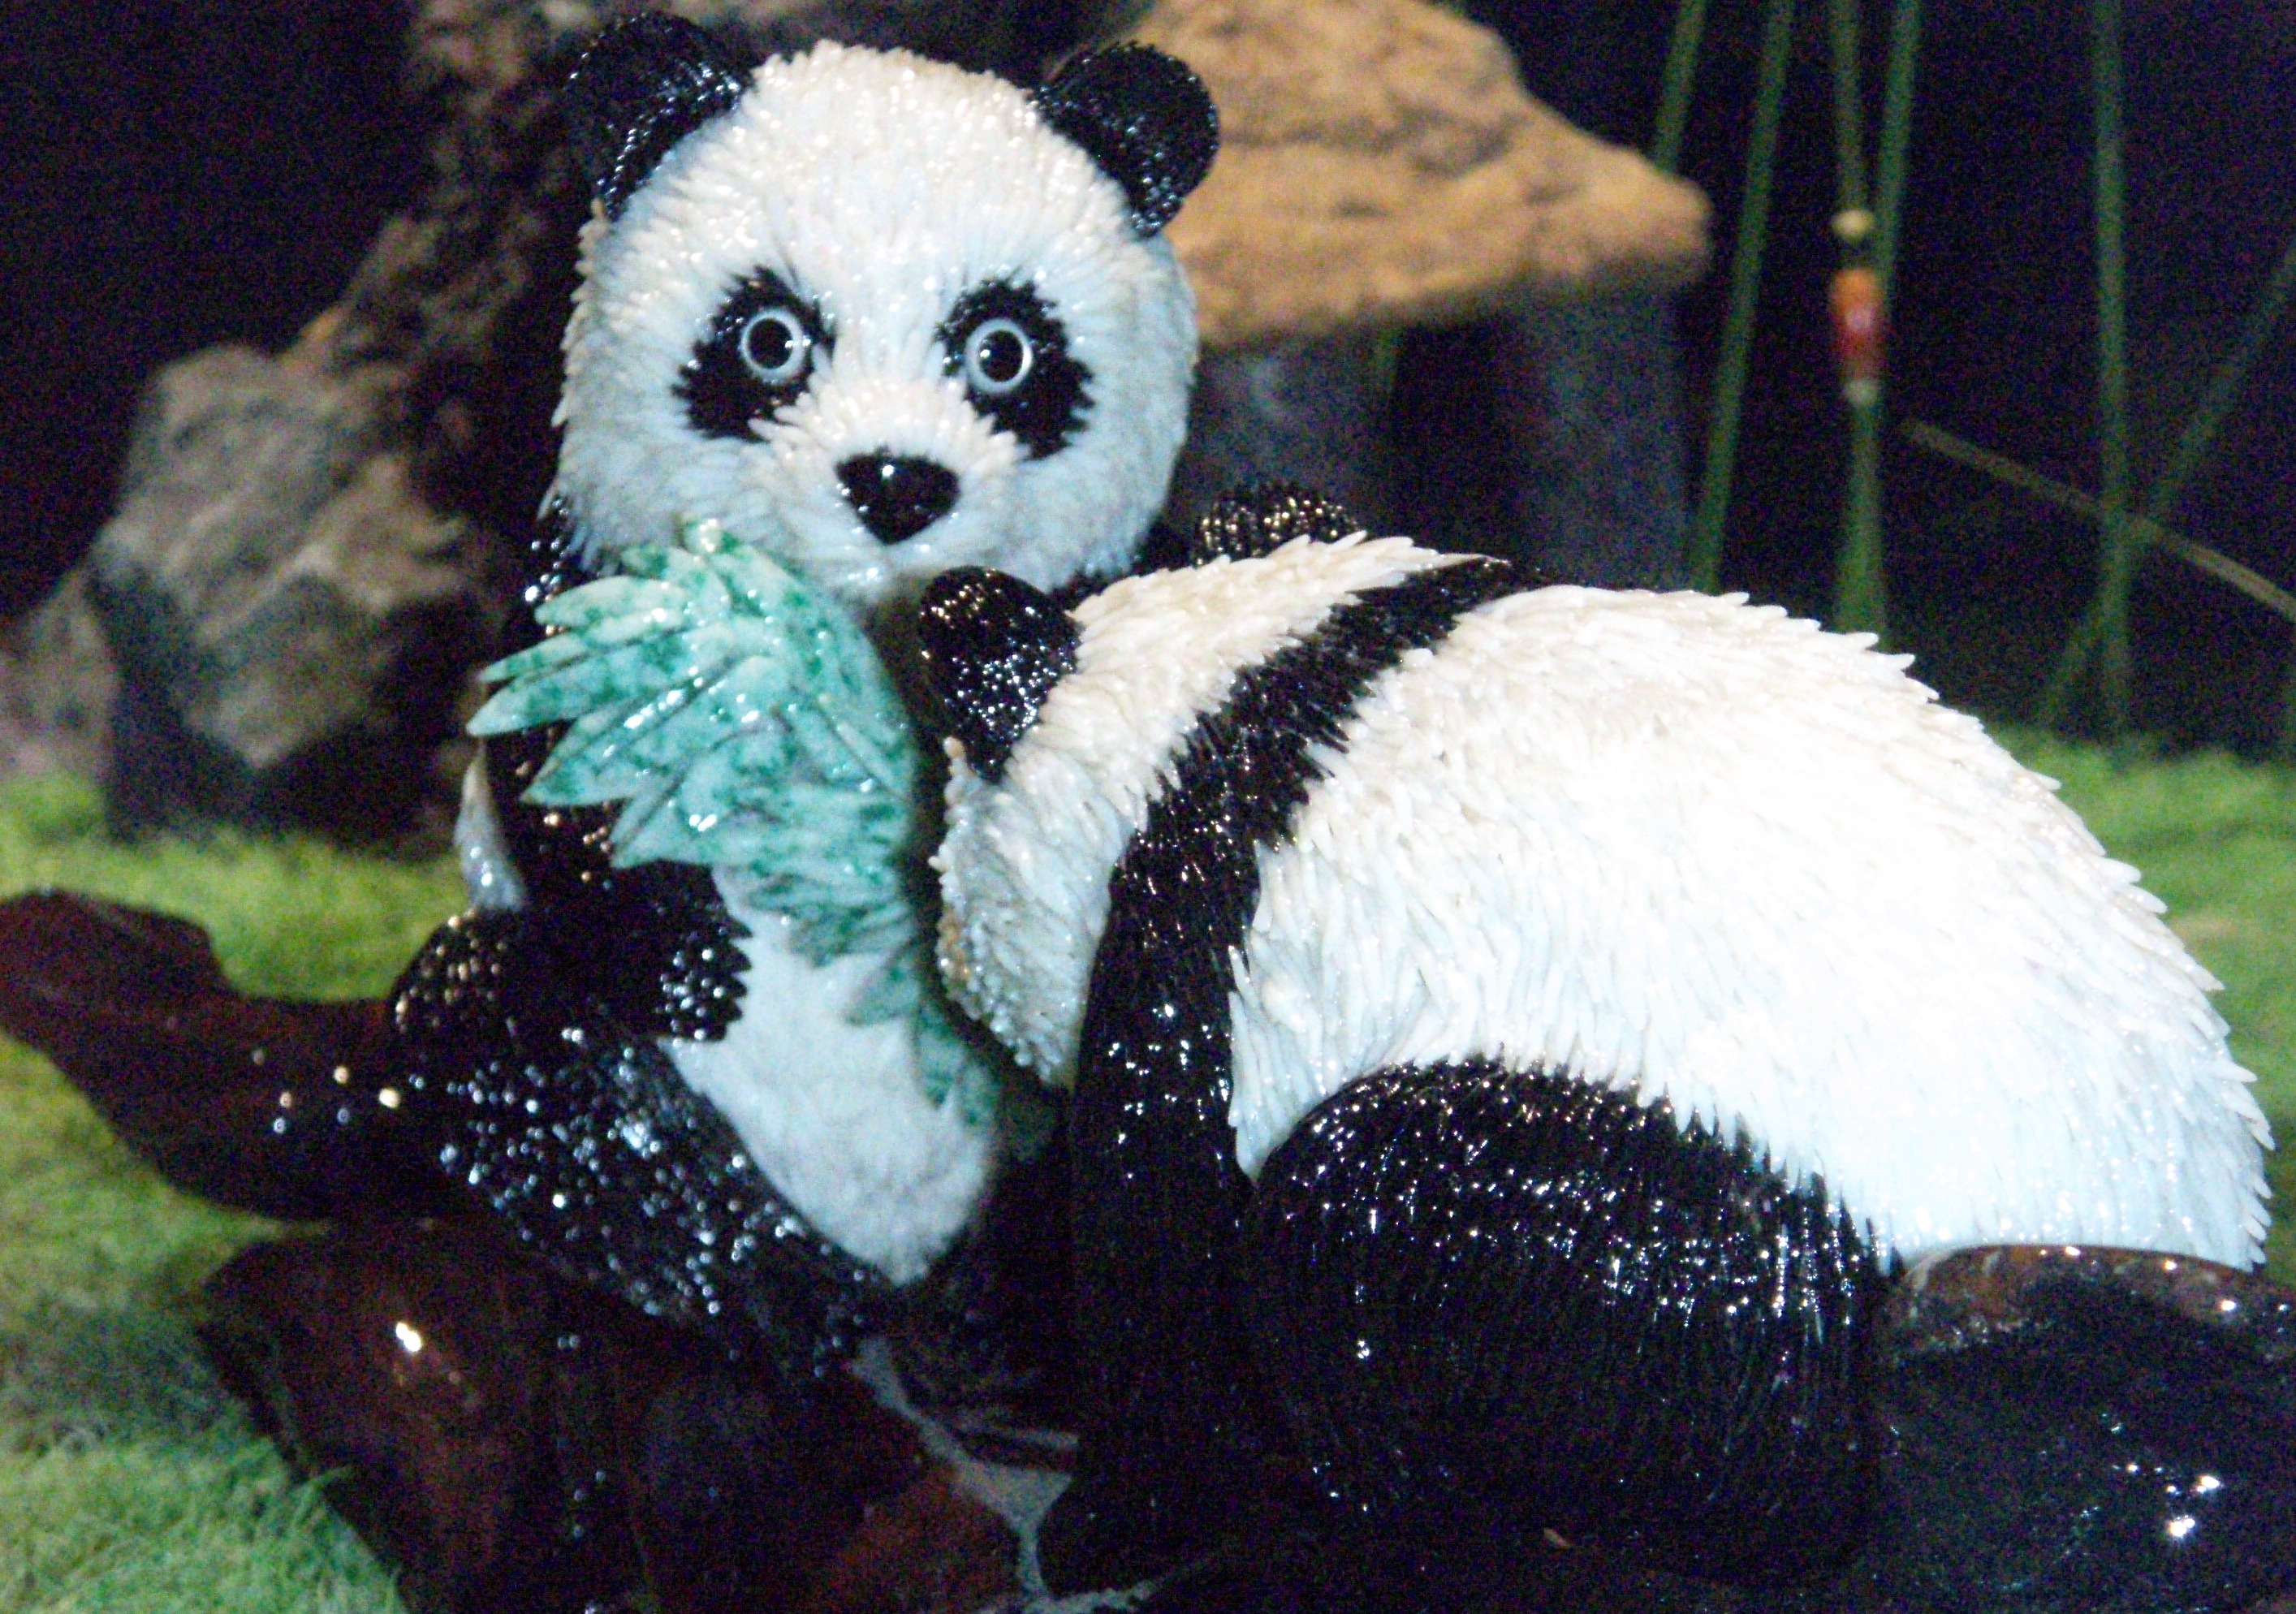 Coral panda statue behind glass photo